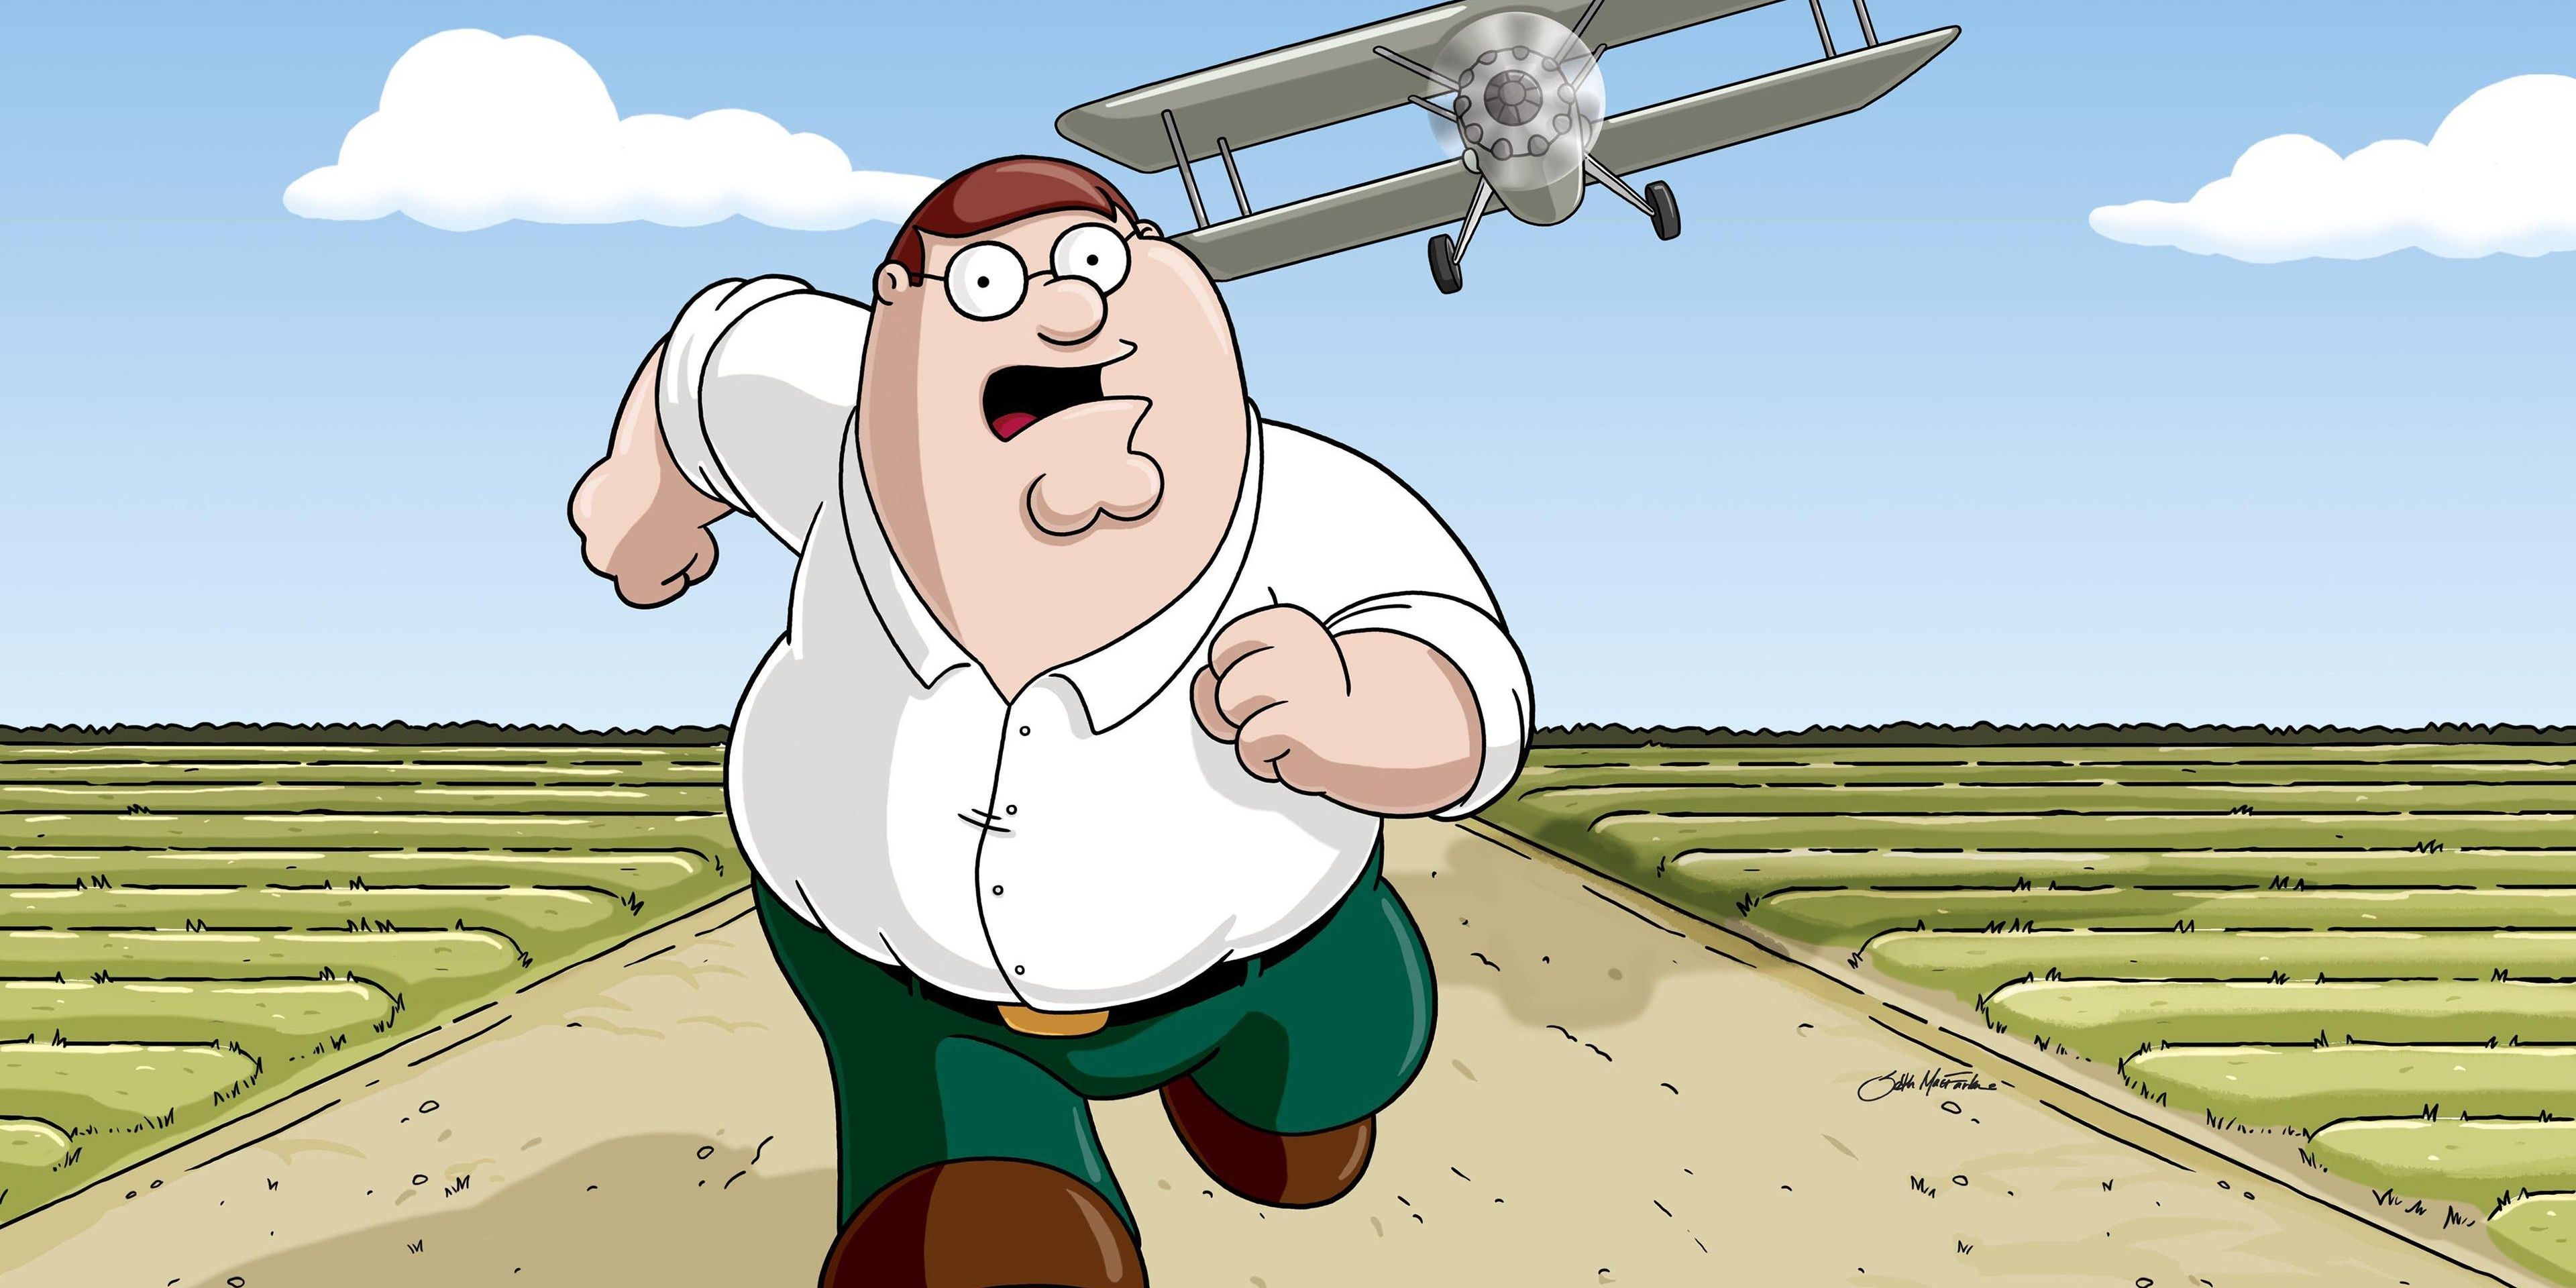 Family Guy 10 Best Season 4 Episodes According To IMDb